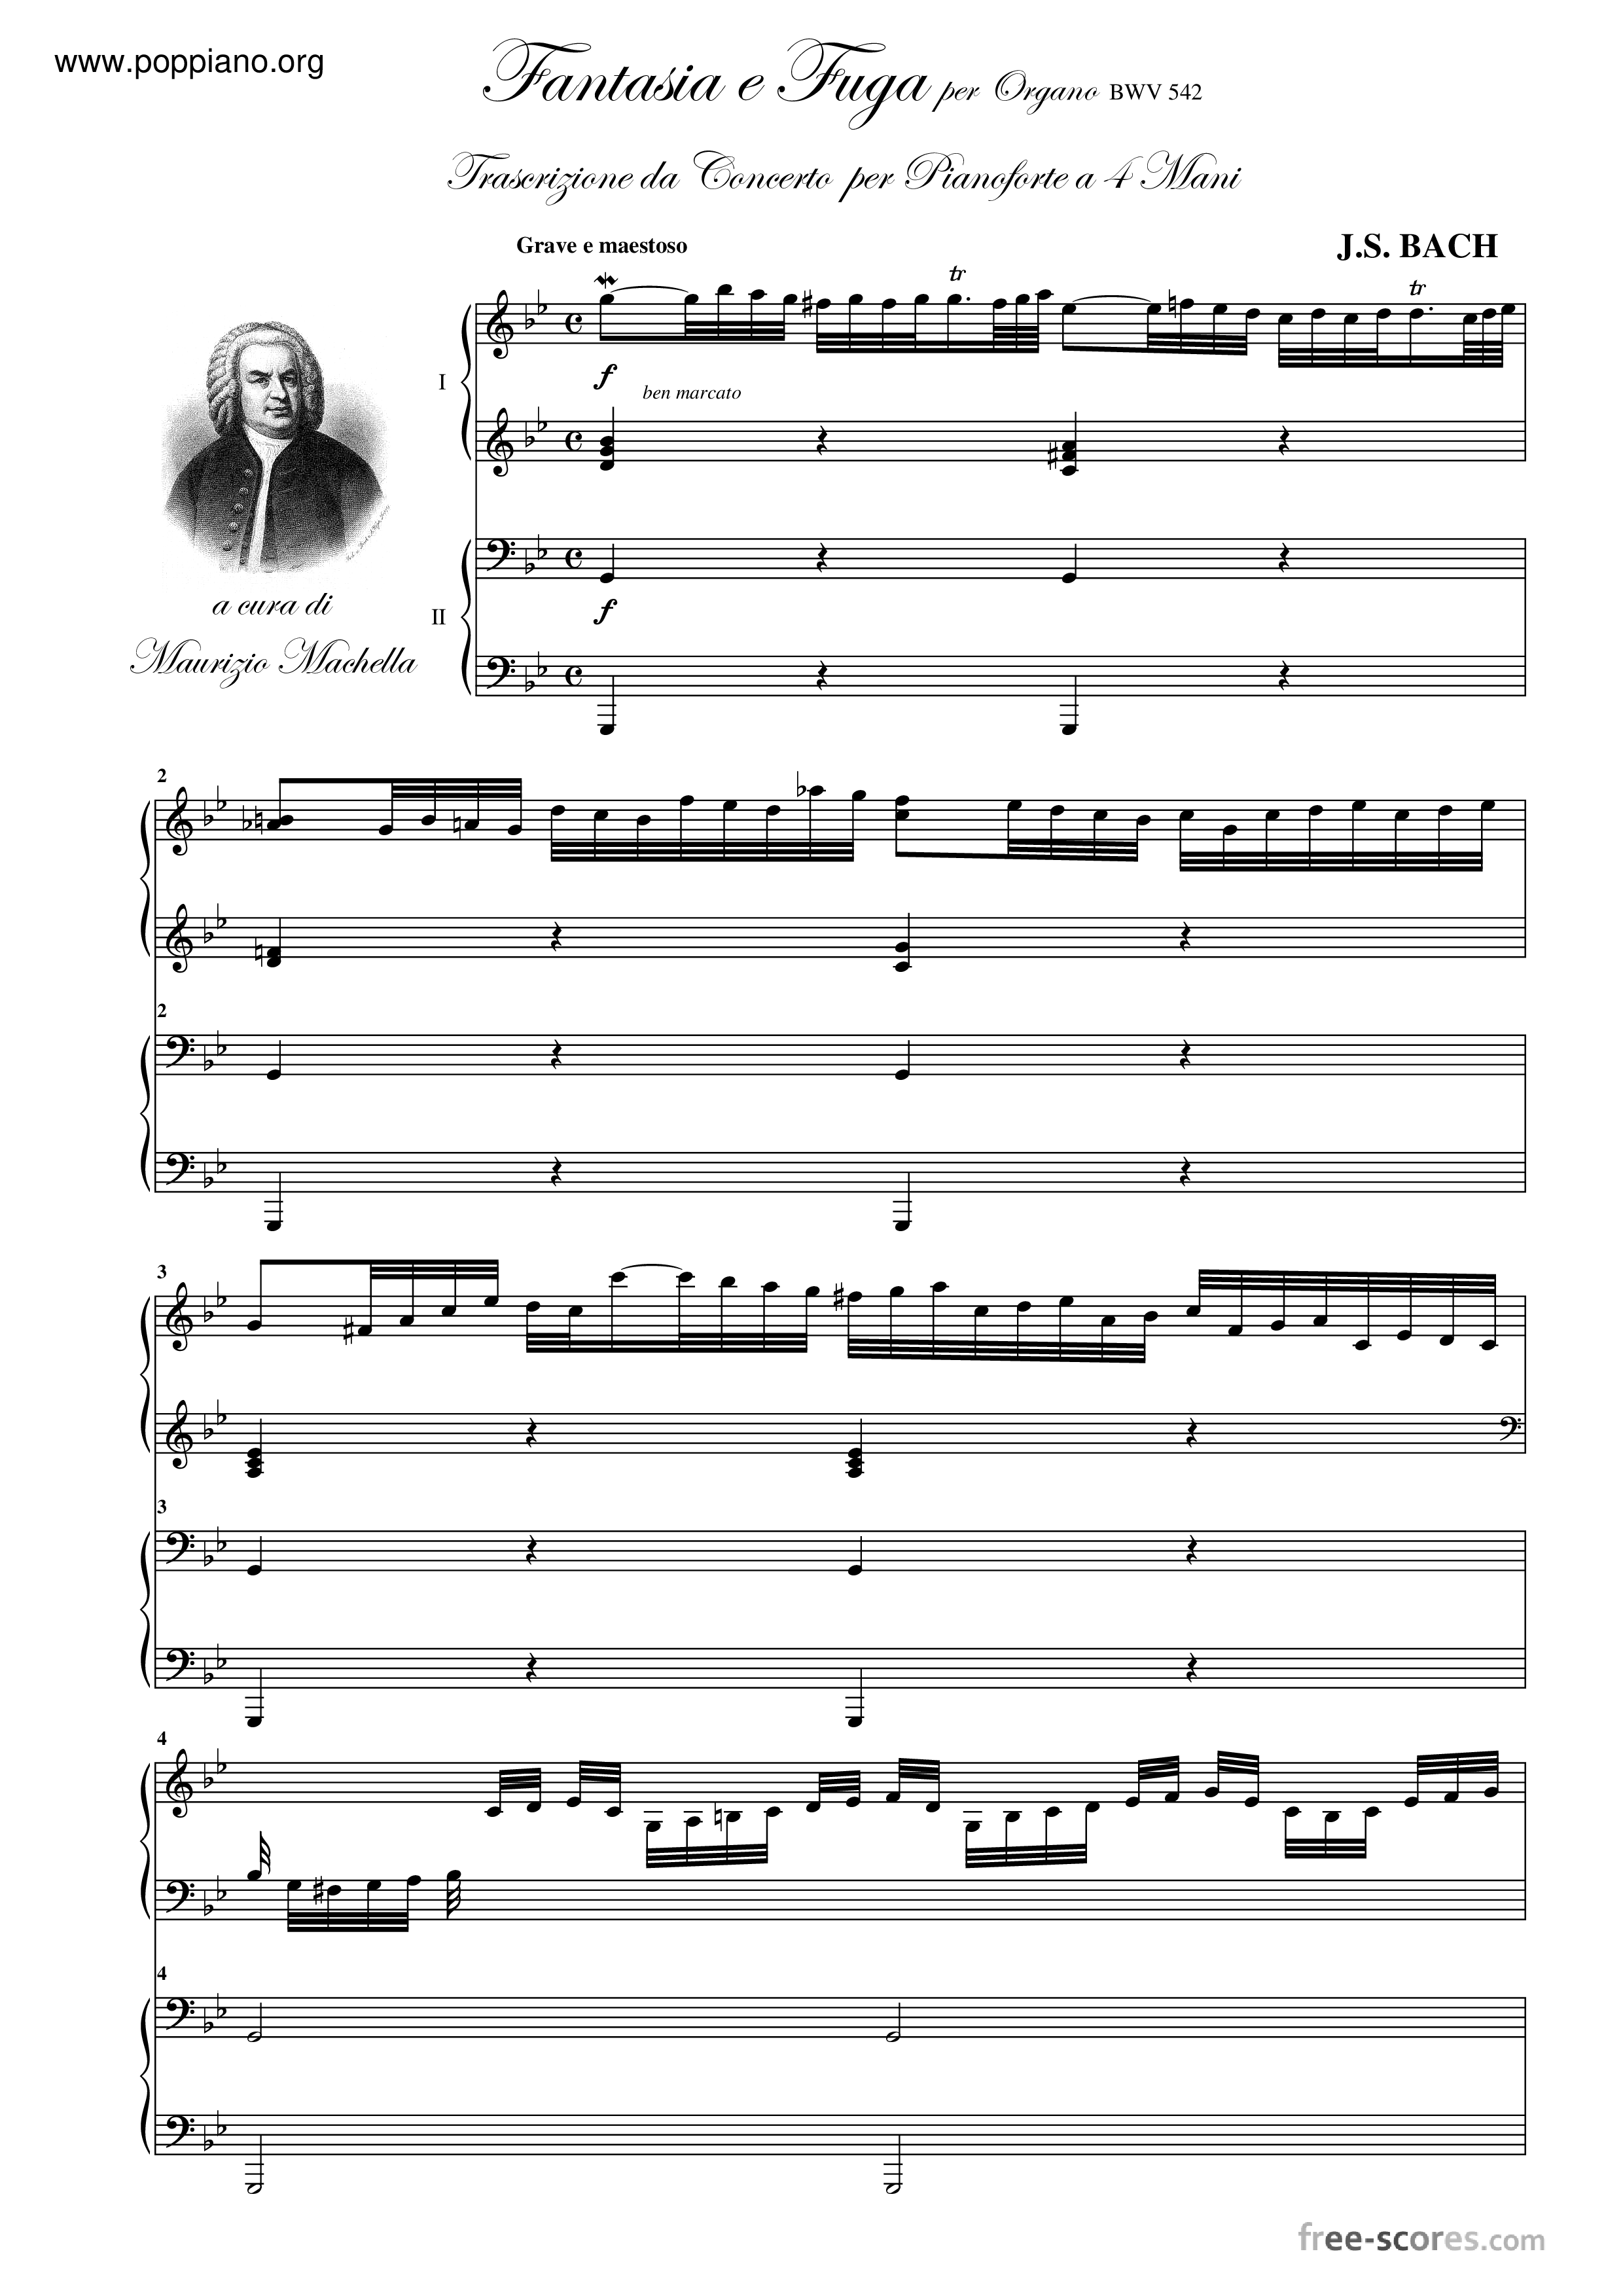 Fantasia and Fugue in G minor, BWV 542 Score